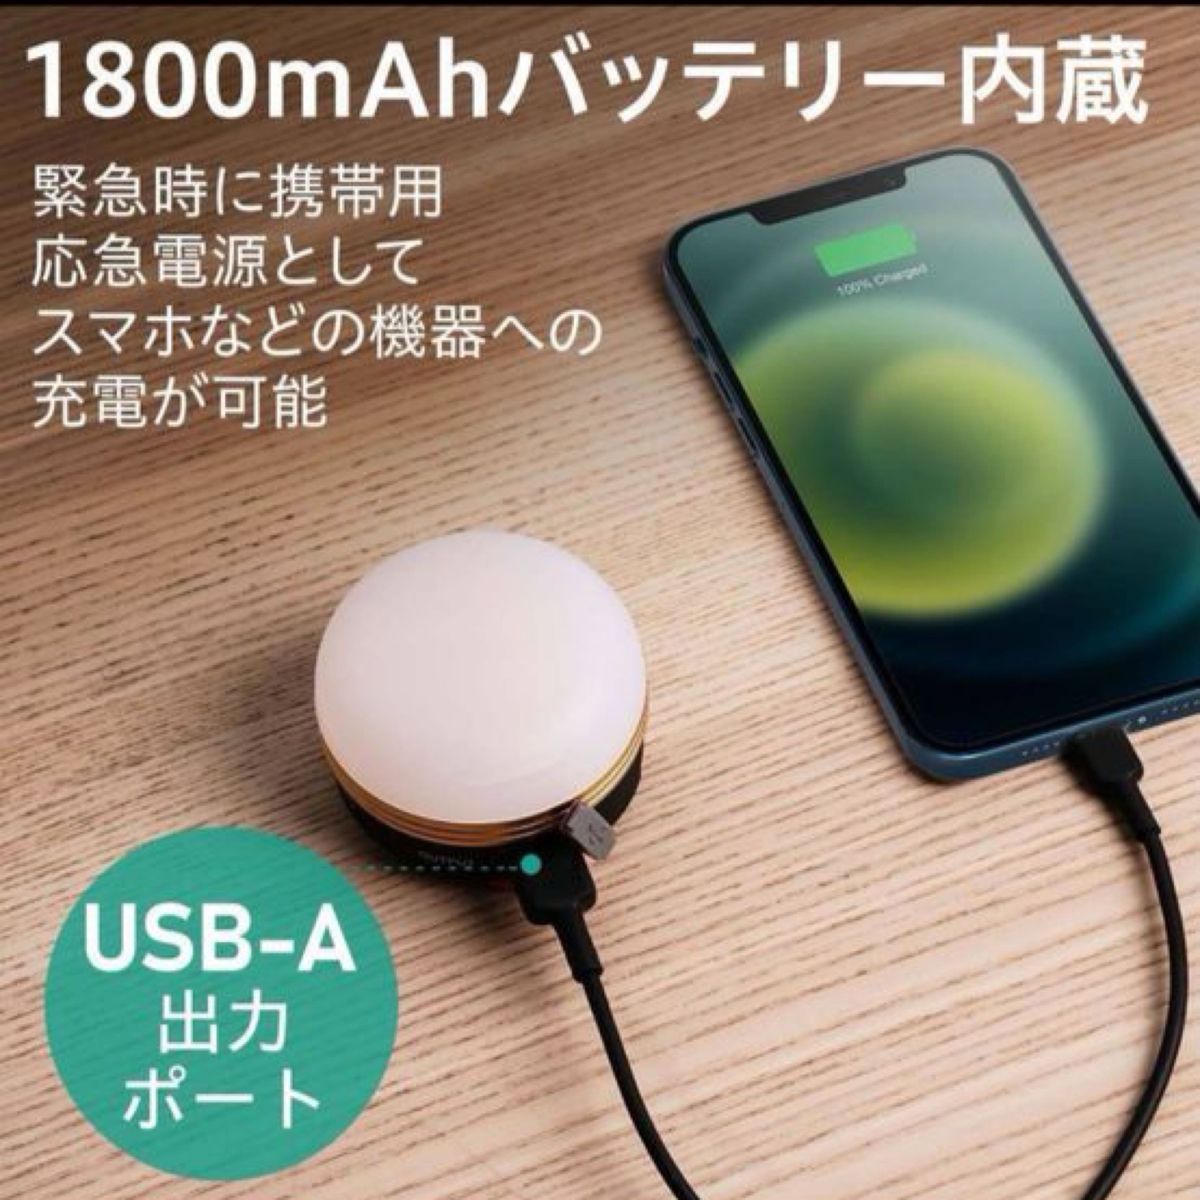 AUKEY USB充電式LEDランタン/1800mAh モバイルバッテリー機能付 防災台風対策 